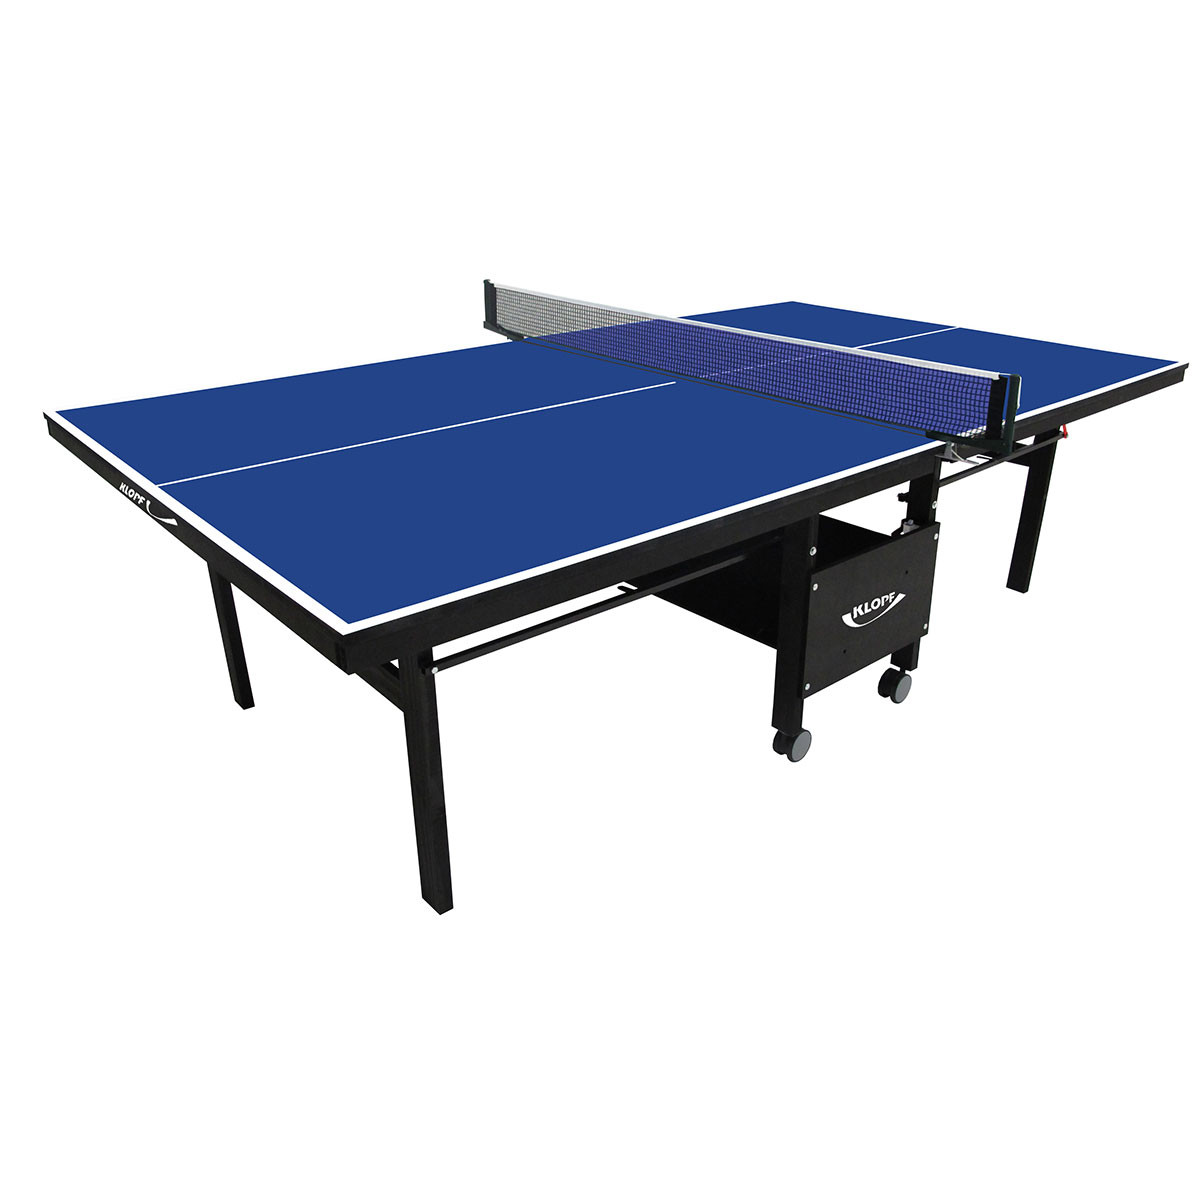 Mesa de Ping Pong Mdf 18mm Dobrável 1,56 x 1,41 x 0,15 UltimaX 1084 -  UltimaX Shop